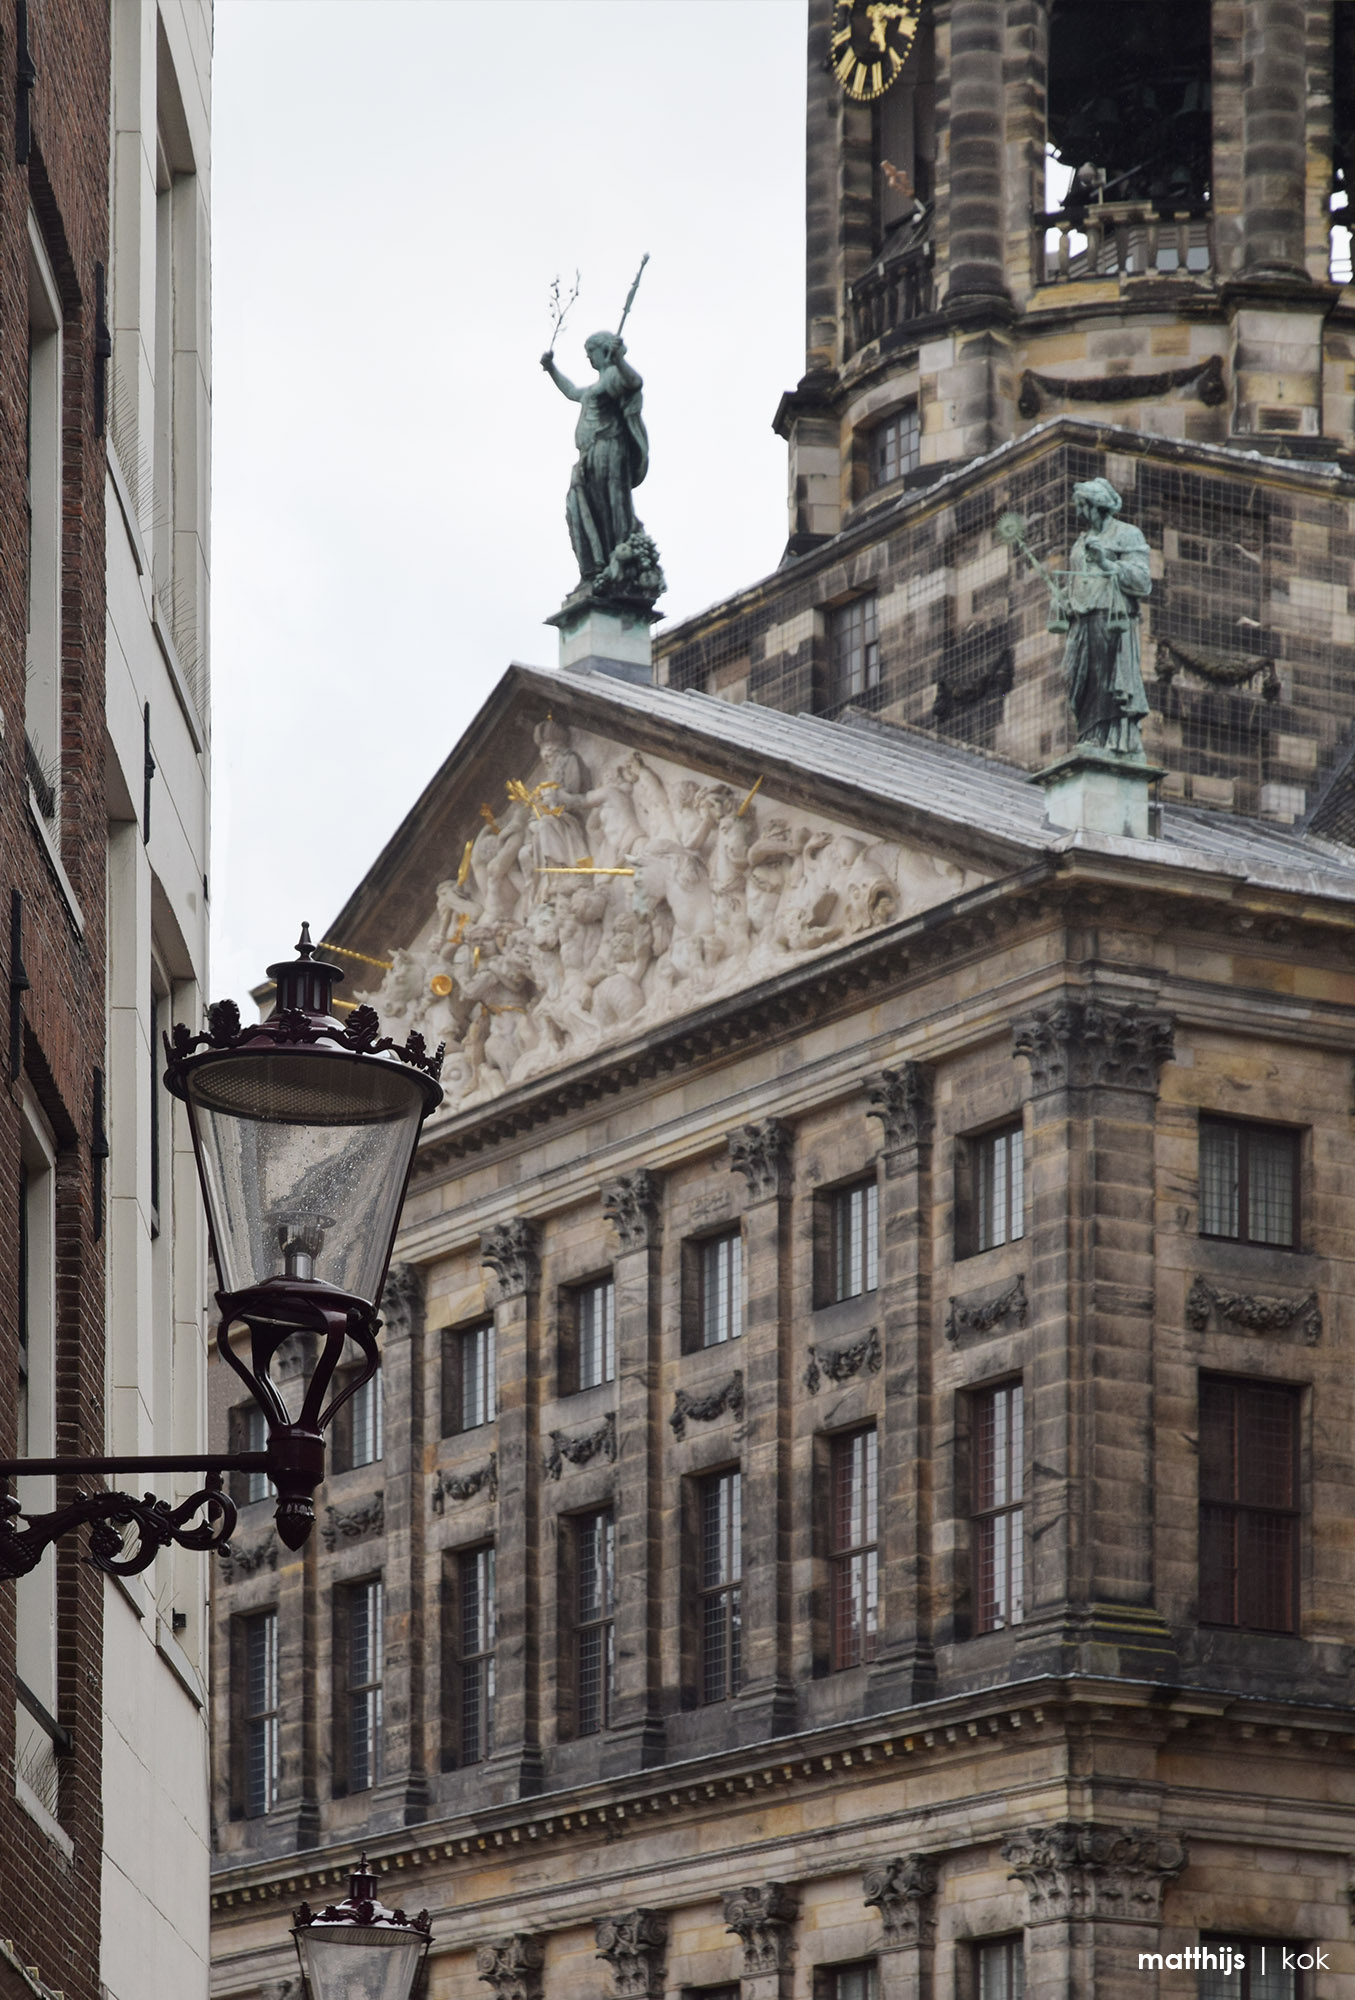 Royal Palace of Amsterdam, The Netherlands | Photography by Matthijs Kok